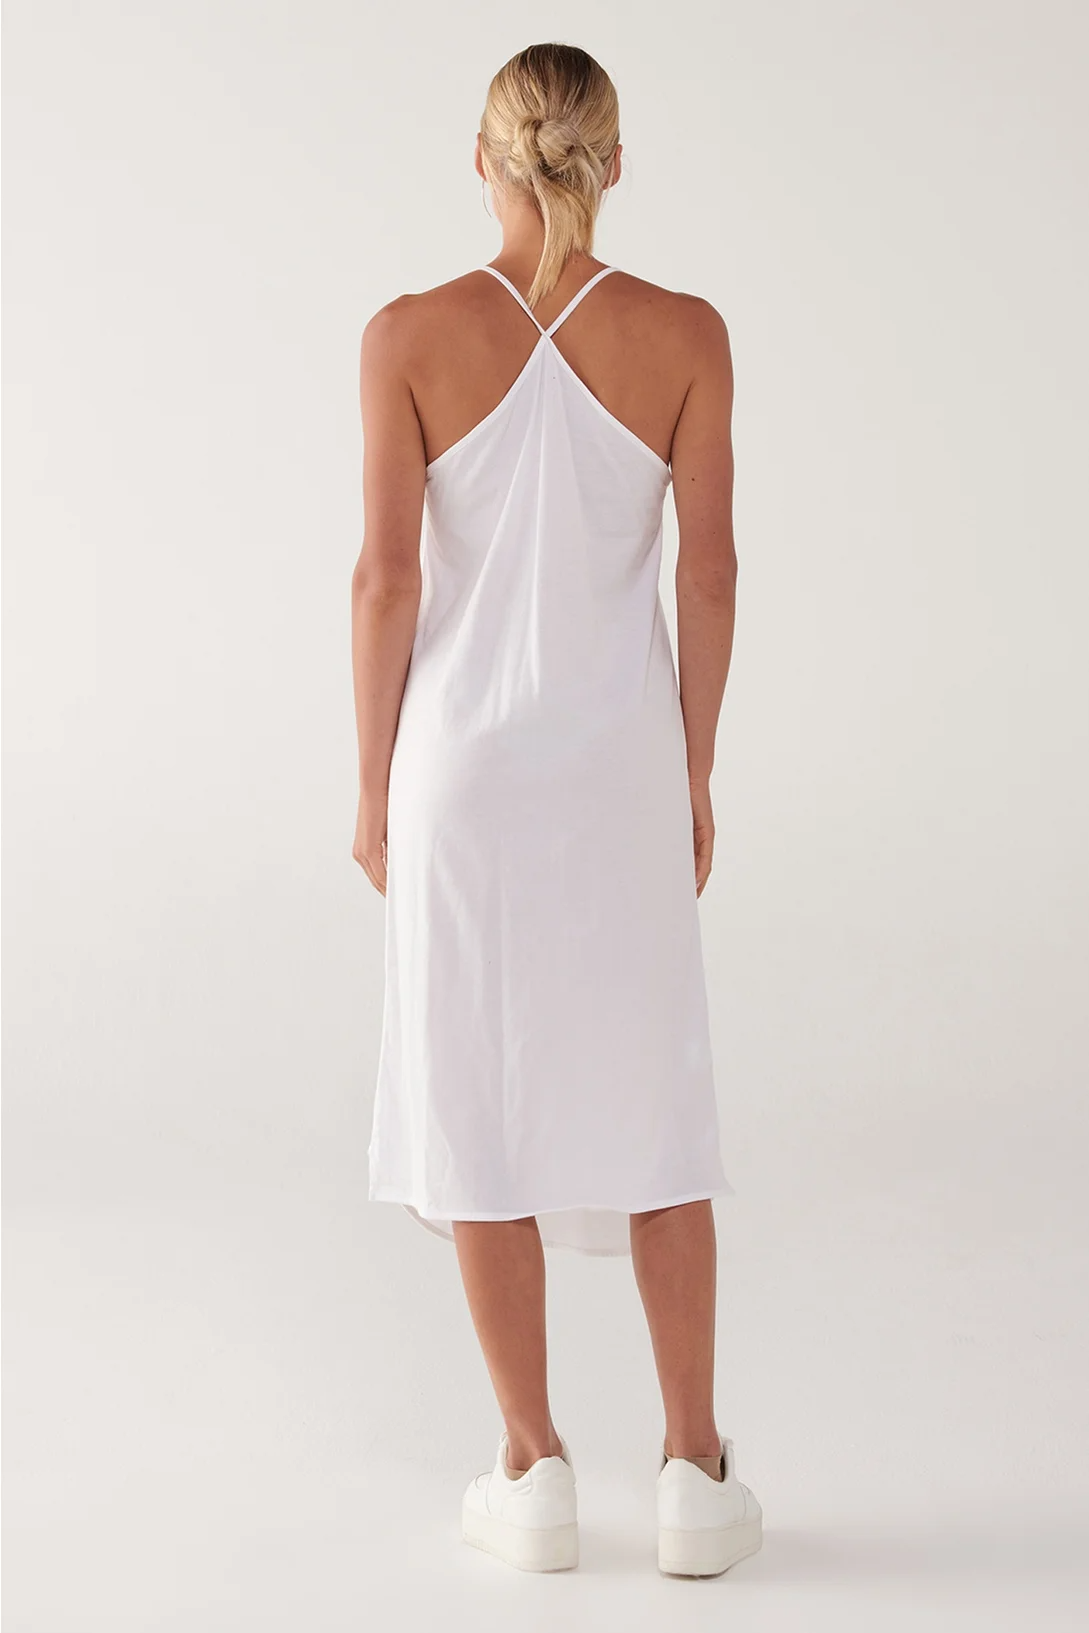 Taylor Extension Dress - White